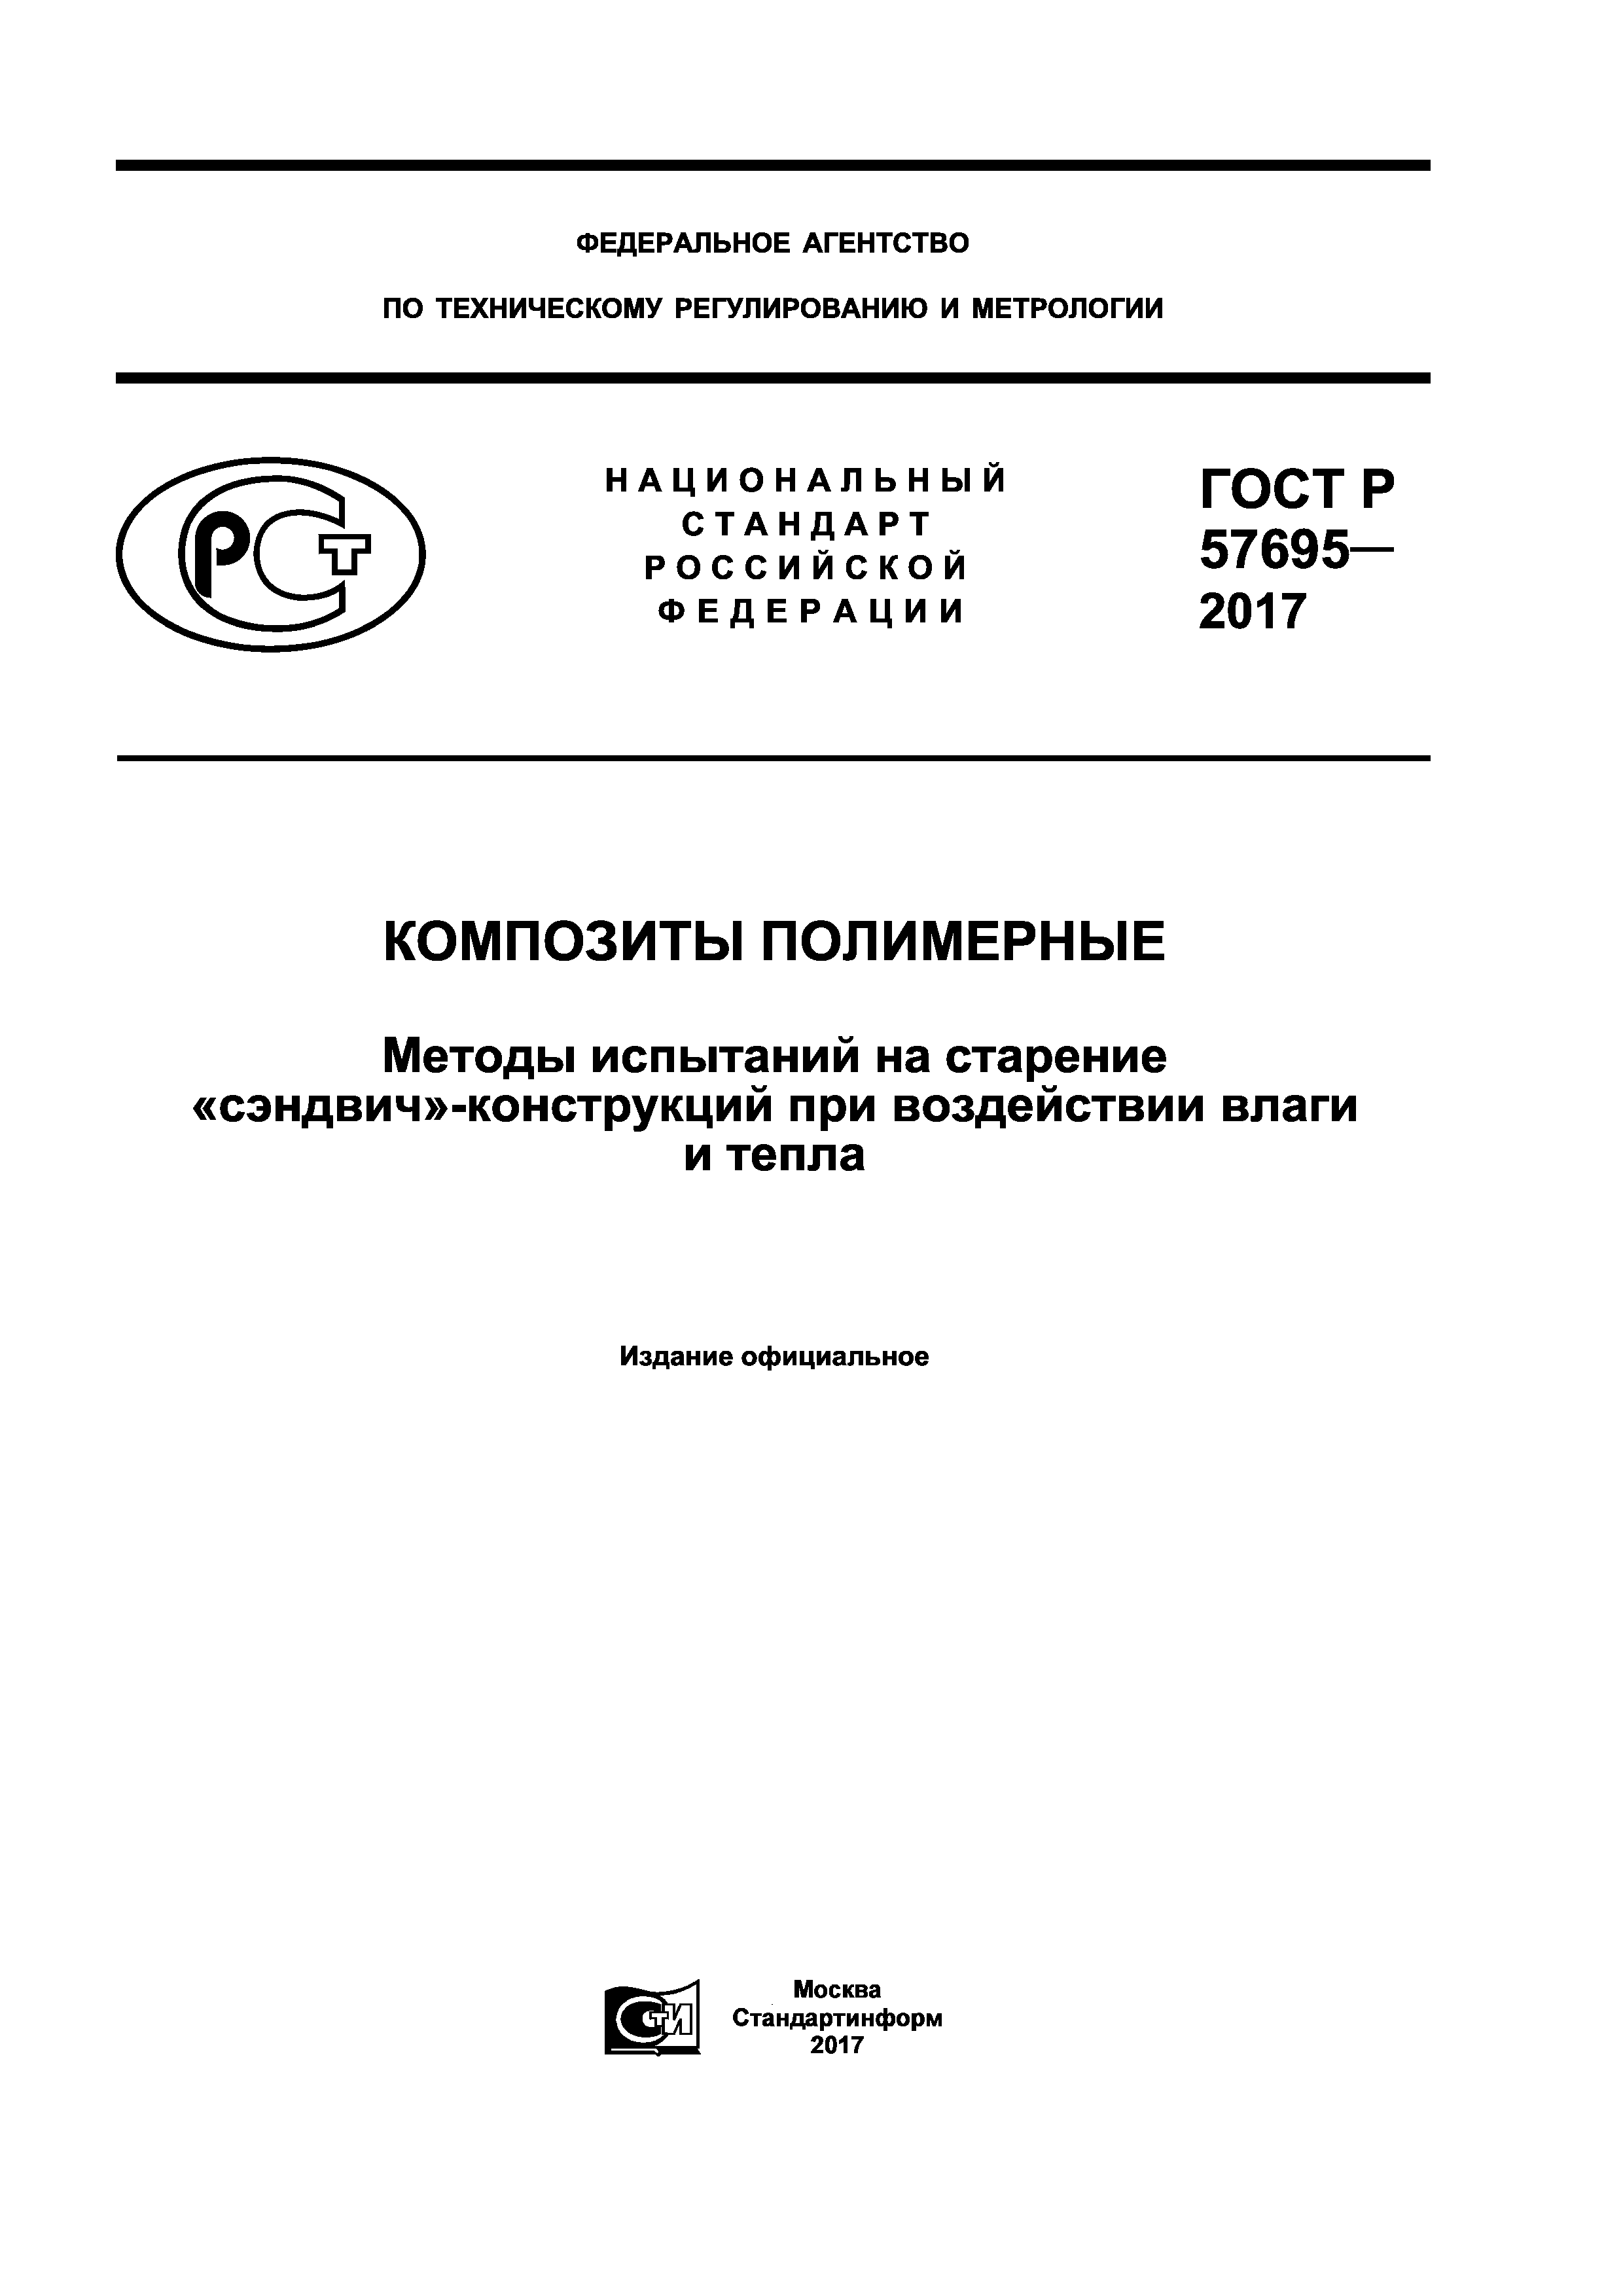 ГОСТ Р 57695-2017